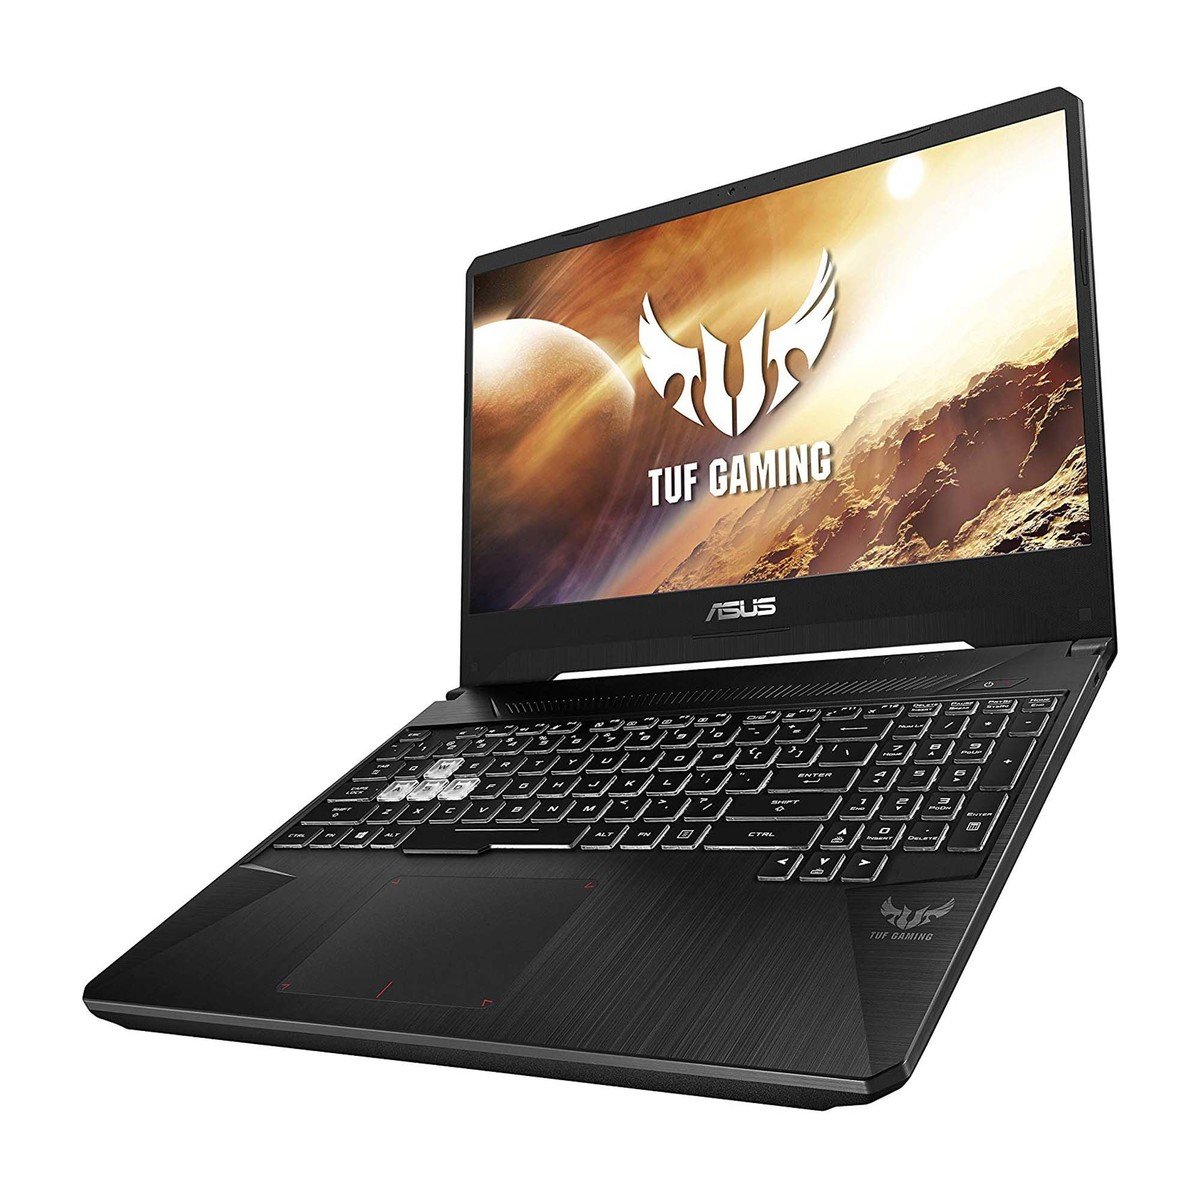 ASUS TUF Gaming FX505DY-BQ024T,15.6-inch FHD Laptop,(AMD Ryzen 5-3550H/8GB RAM/512GB NVMe SSD/Windows 10/Radeon RX 560X 4GB Graphics), Black Plastic